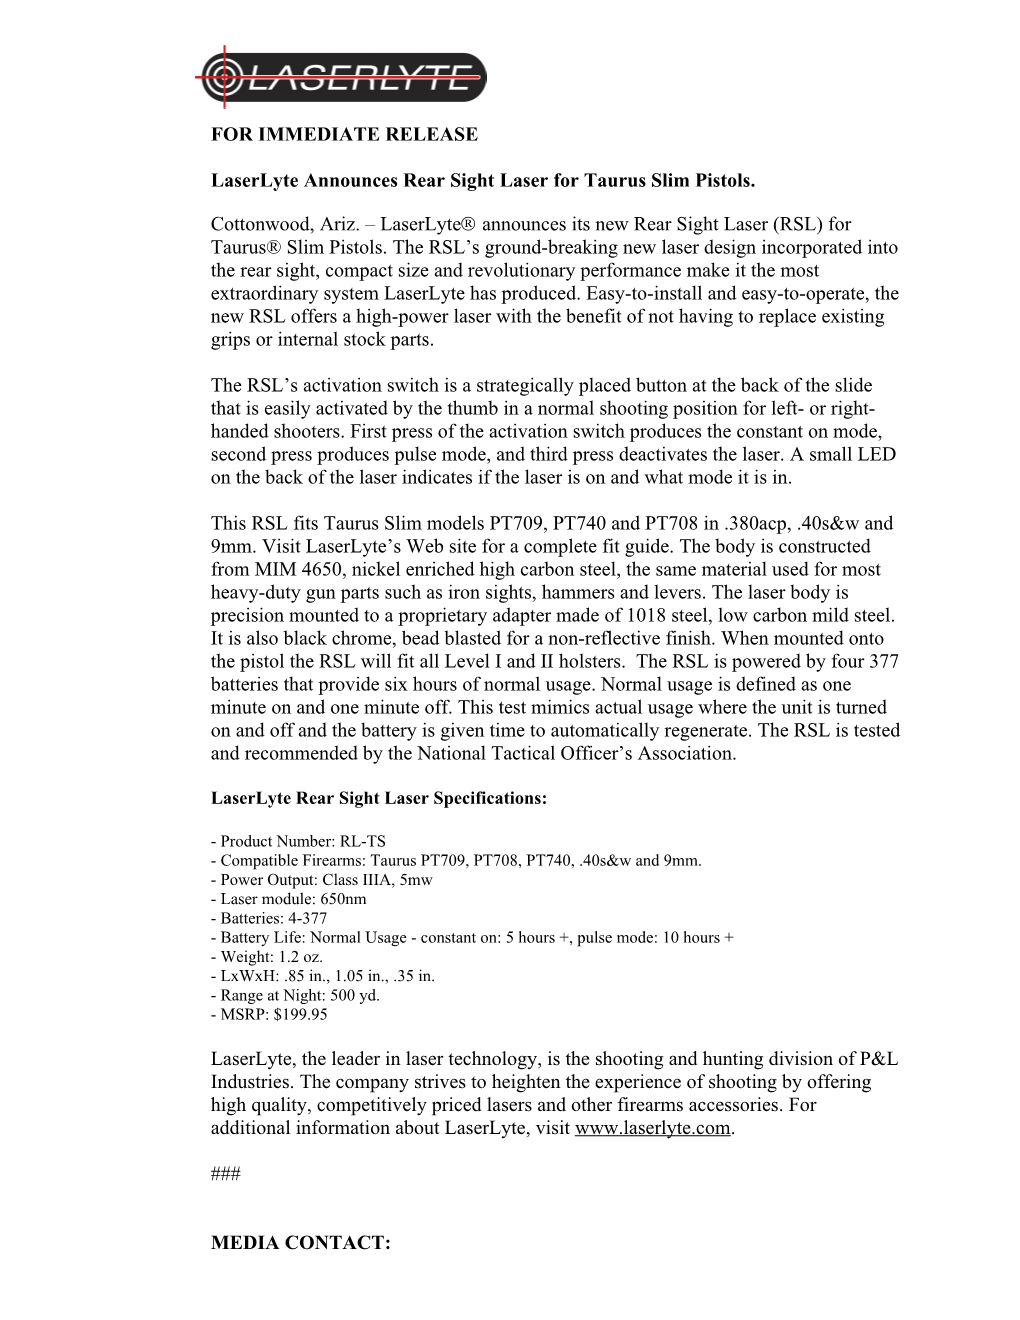 Laserlyte Announces Rear Sight Laser for Taurus Slim Pistols